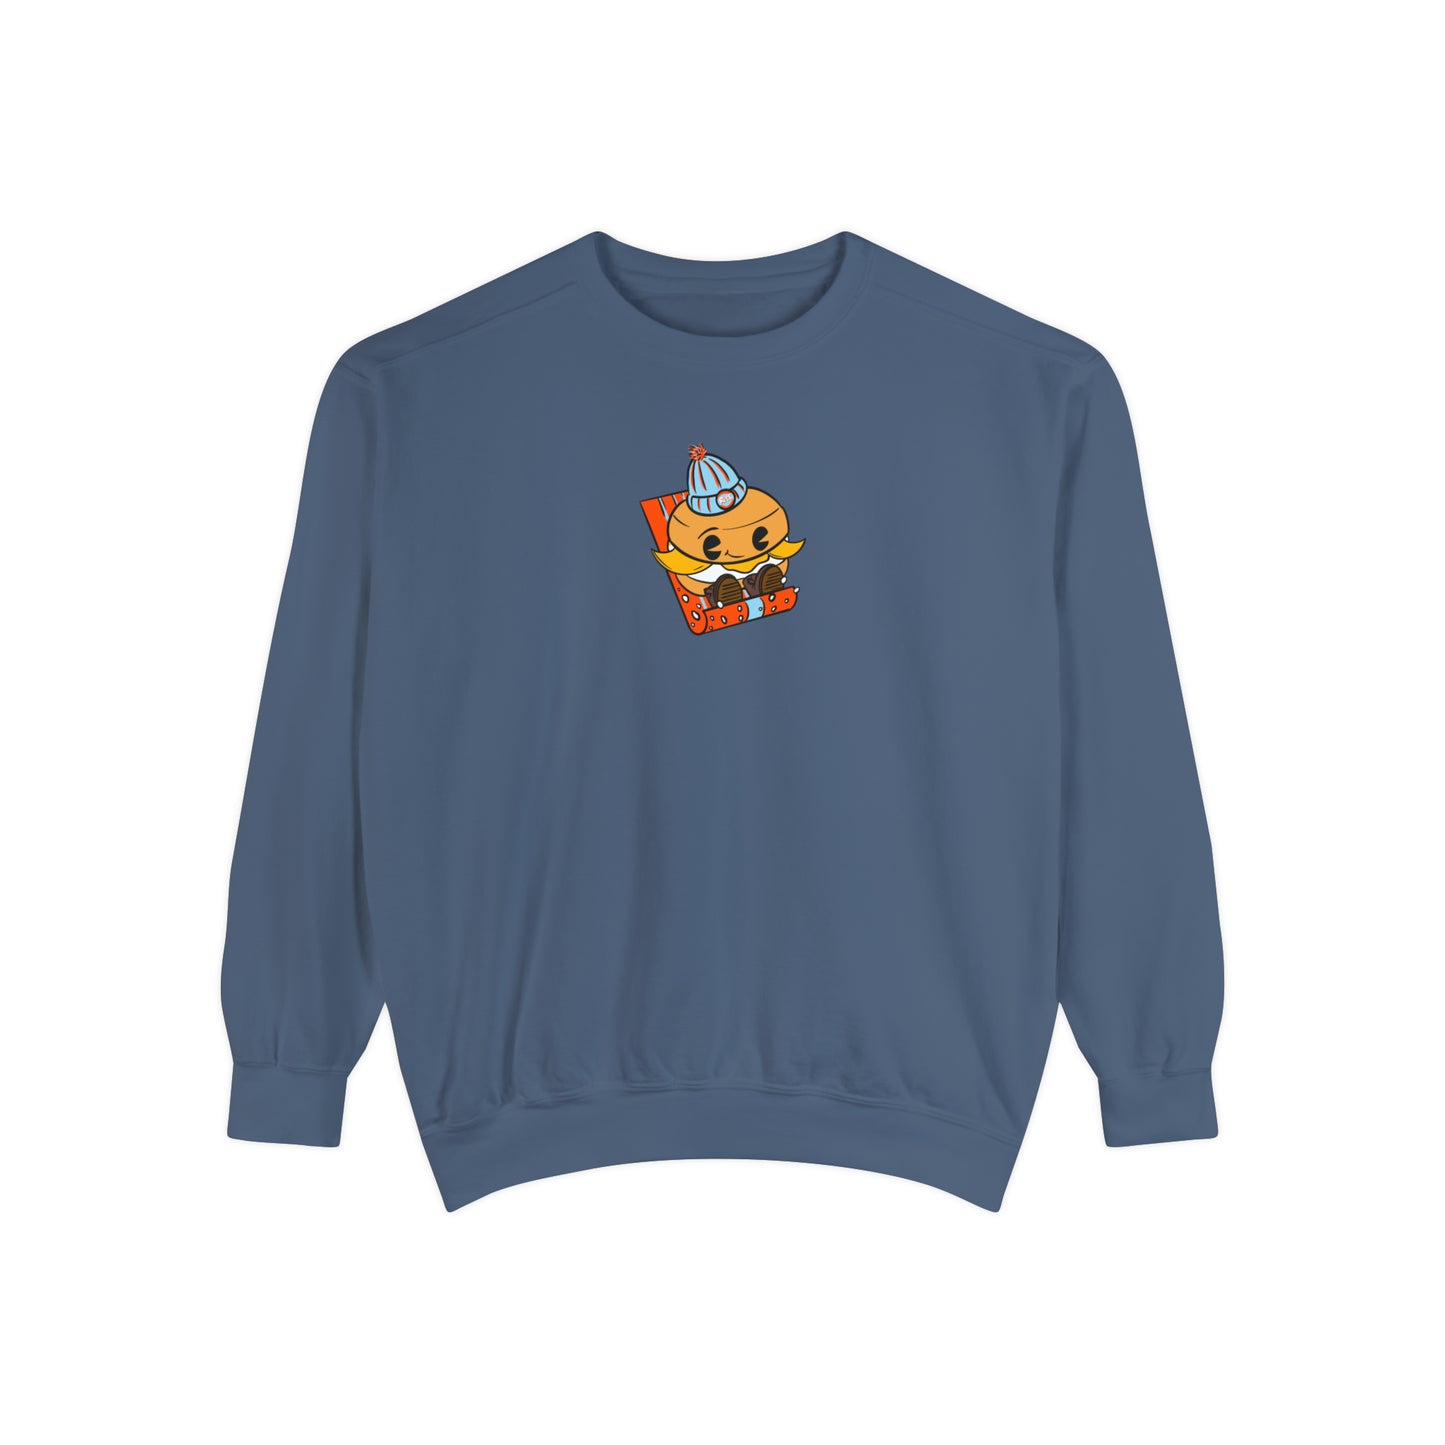 Sledding Biscuit - Unisex Garment-Dyed Sweatshirt